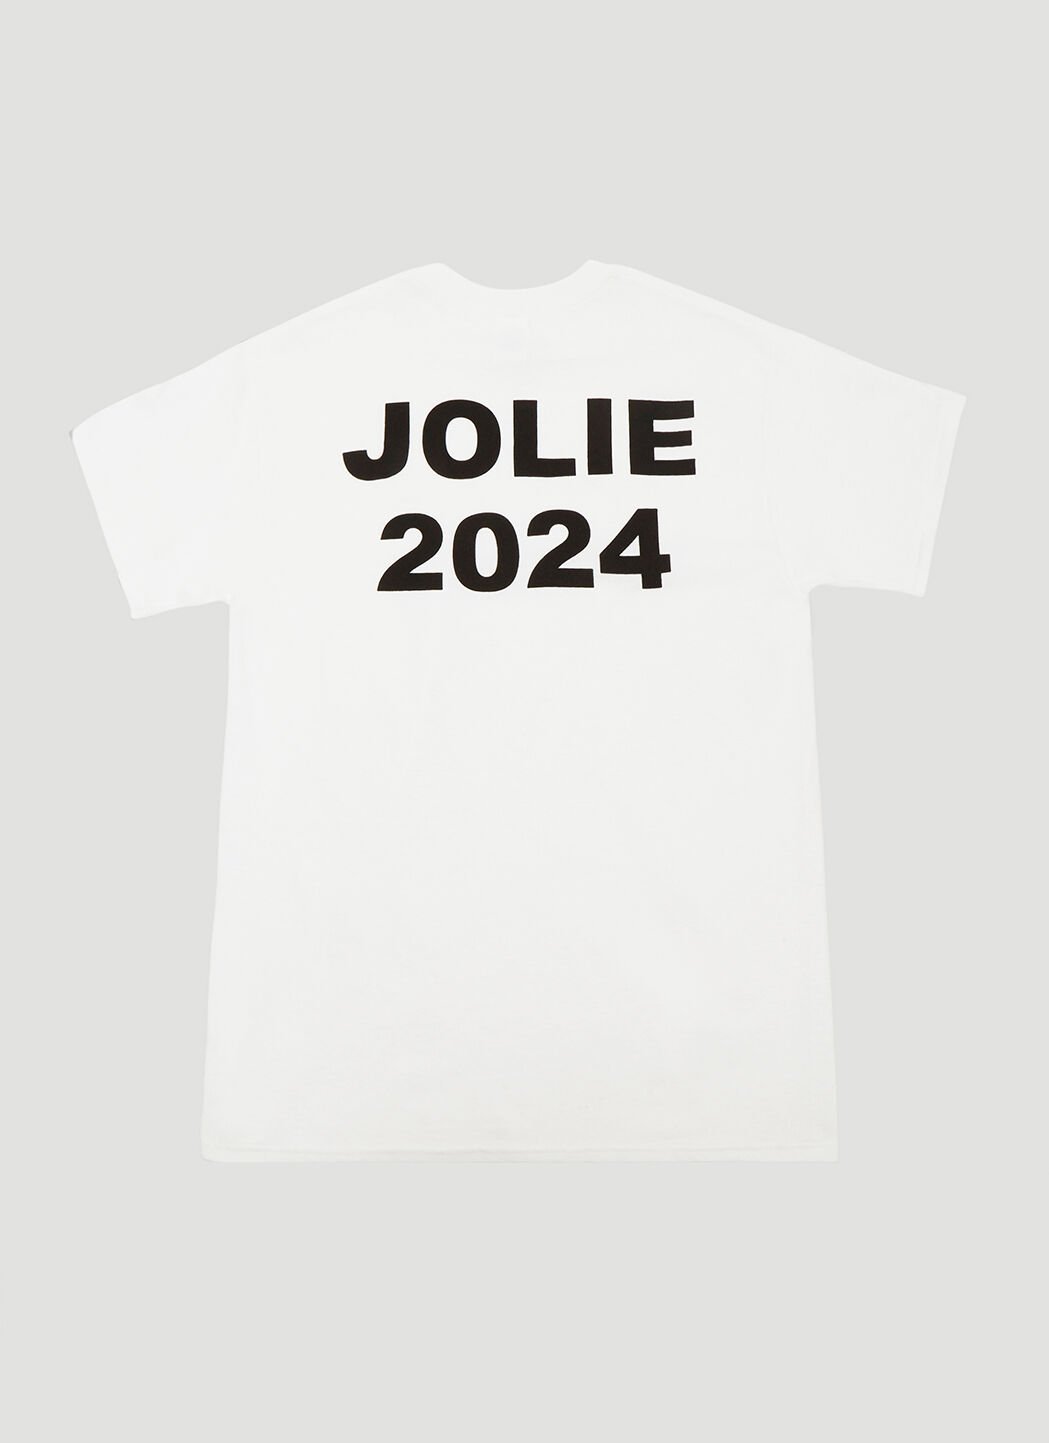 Saint Laurent Article 1 Jolie 2024 티셔츠 Black sla0141037